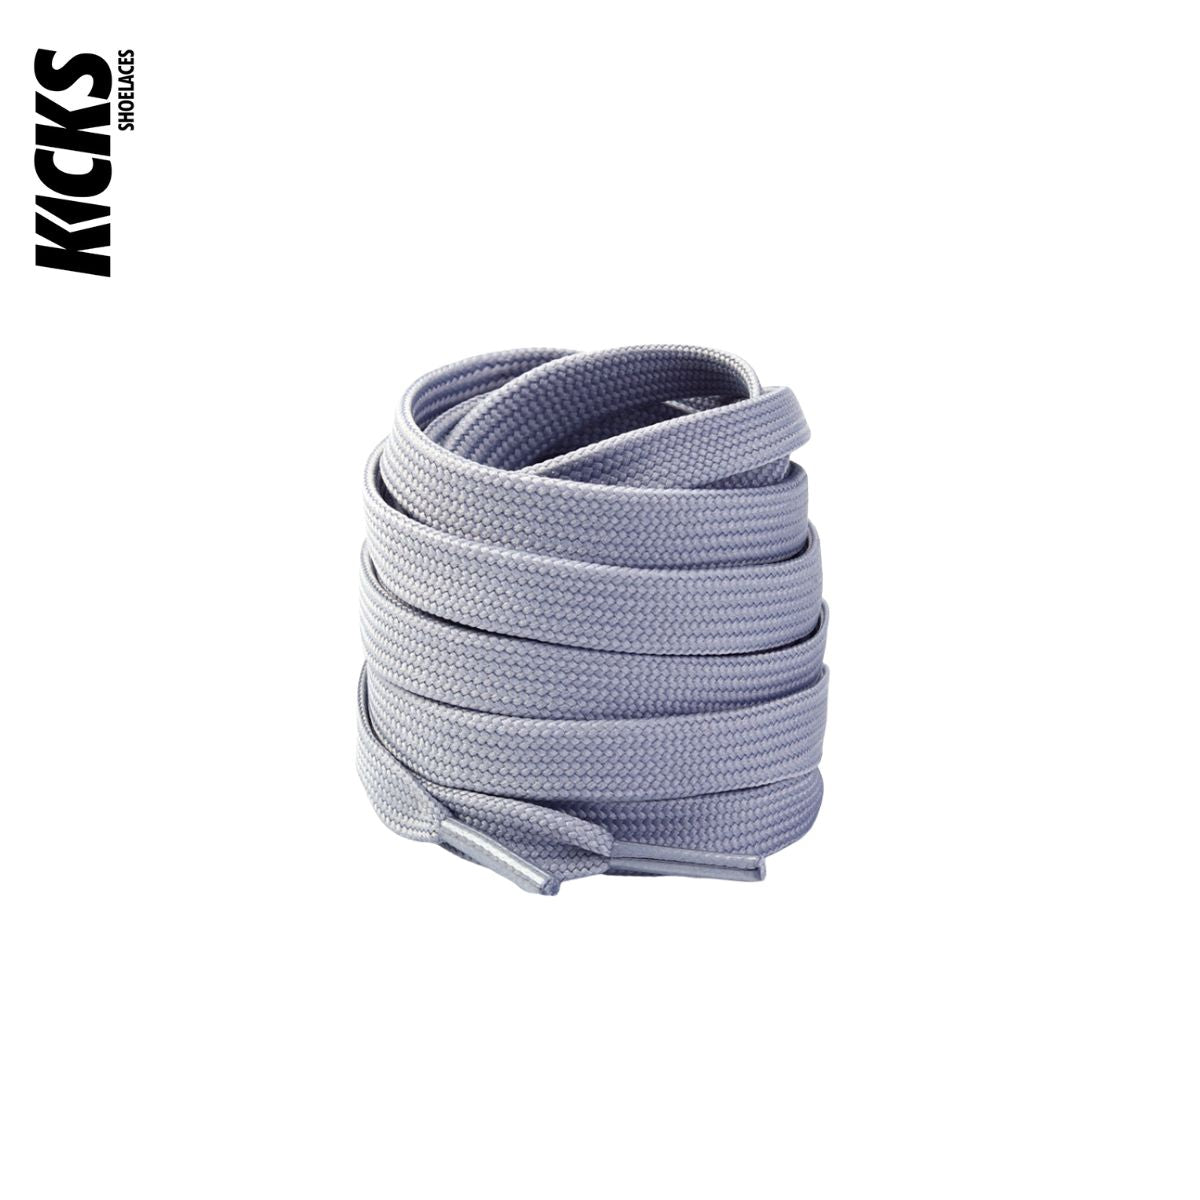 Grey Nike Dunks Shoelace Replacements - Kicks Shoelaces